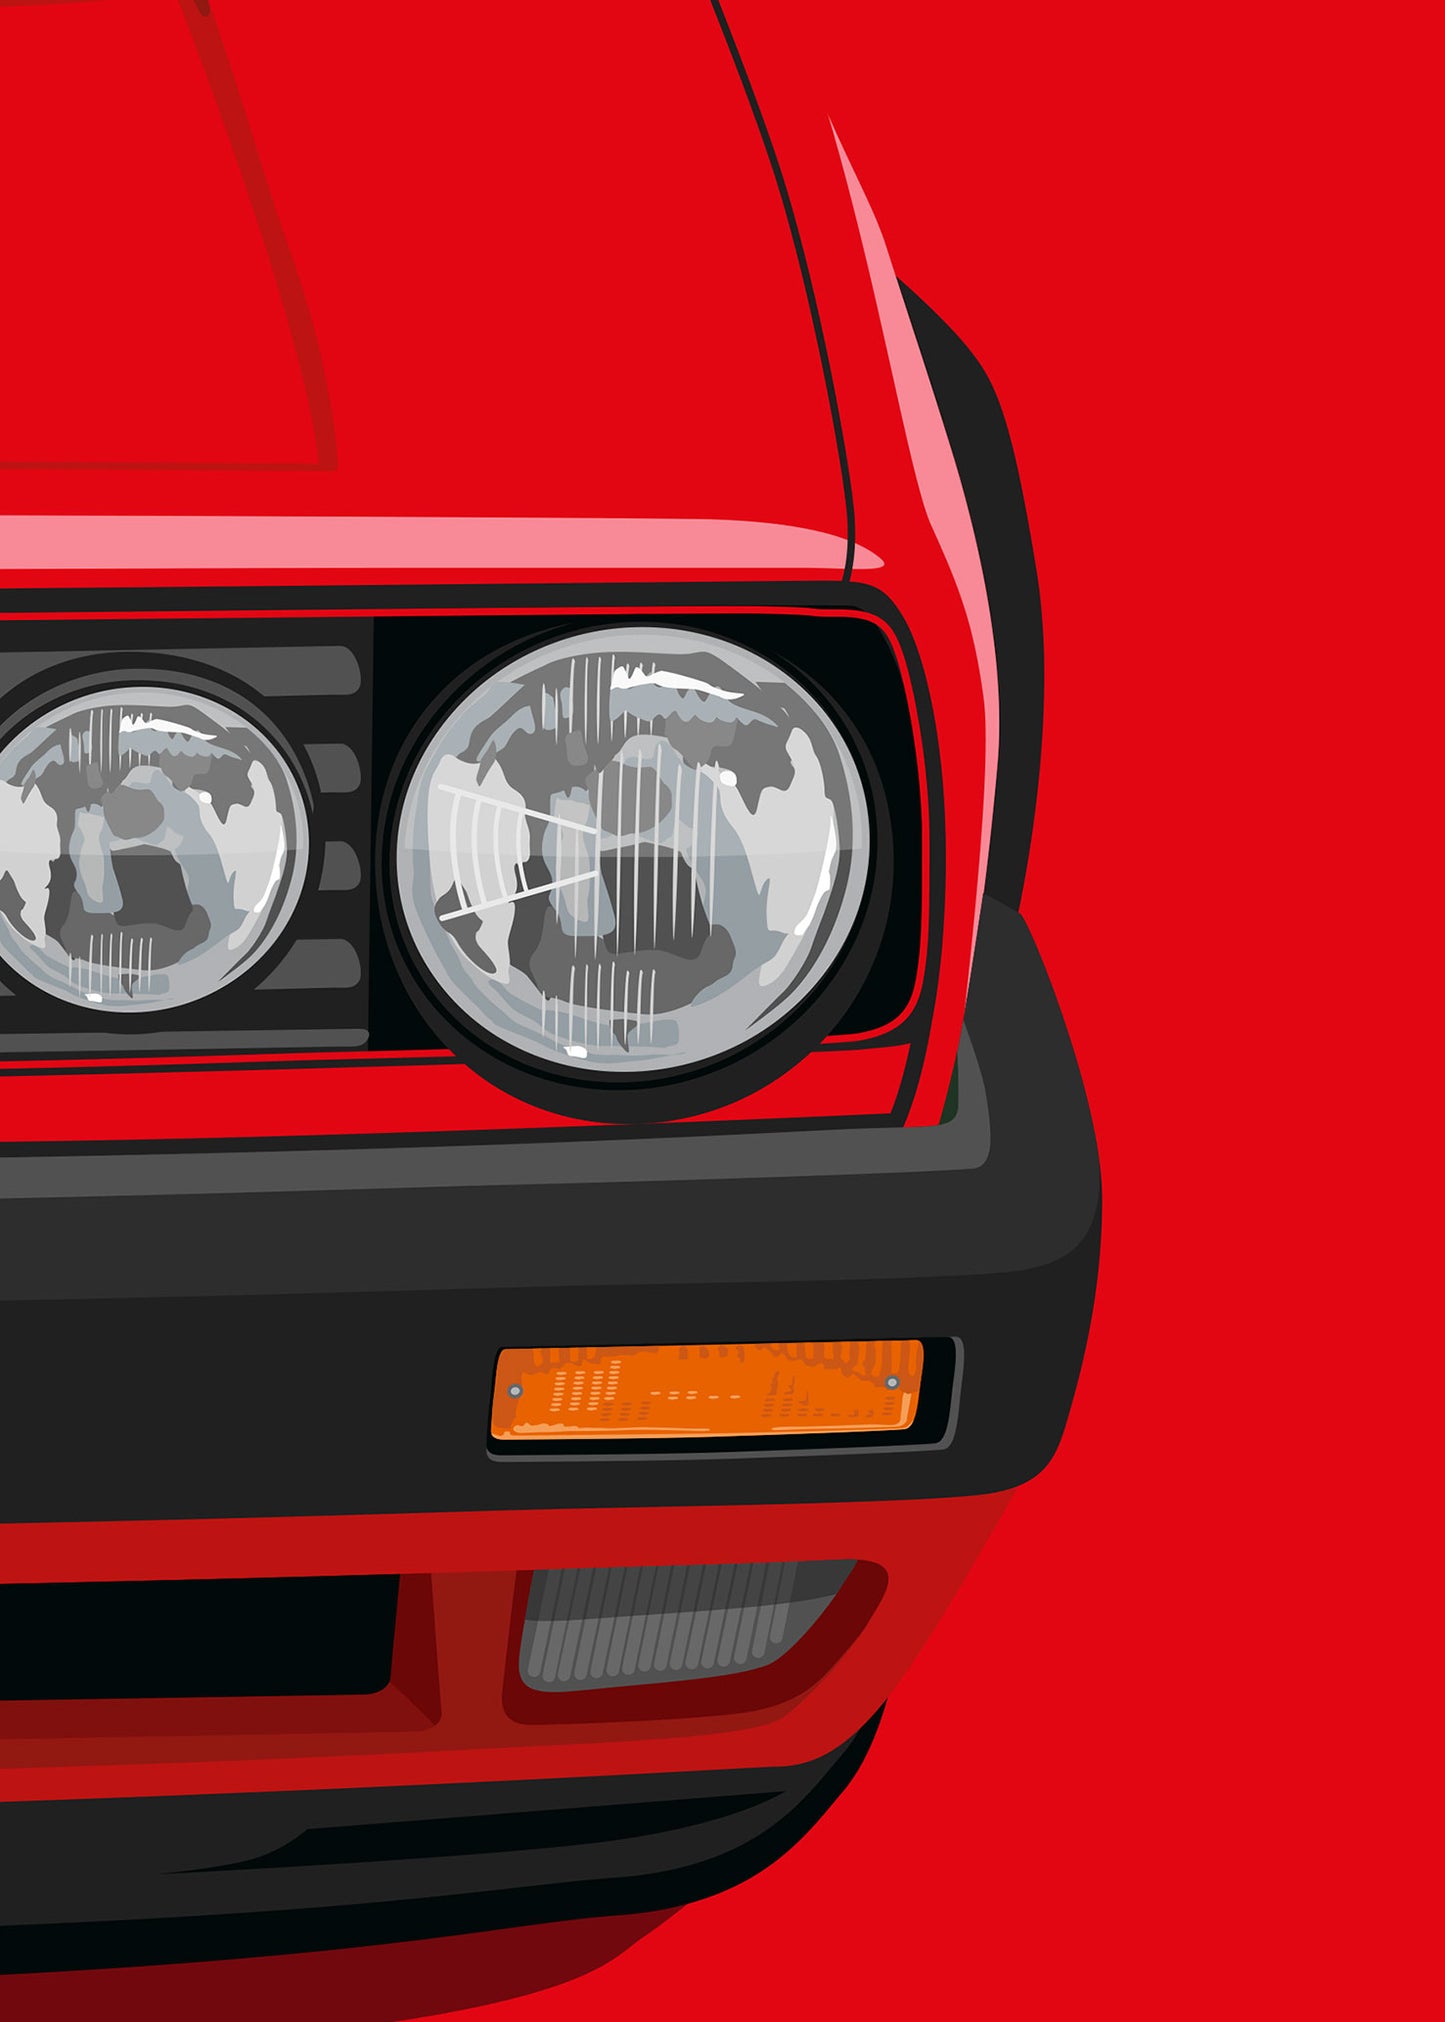 1991 Volkswagen Golf GTI (Mk2) - Mars Red - poster print